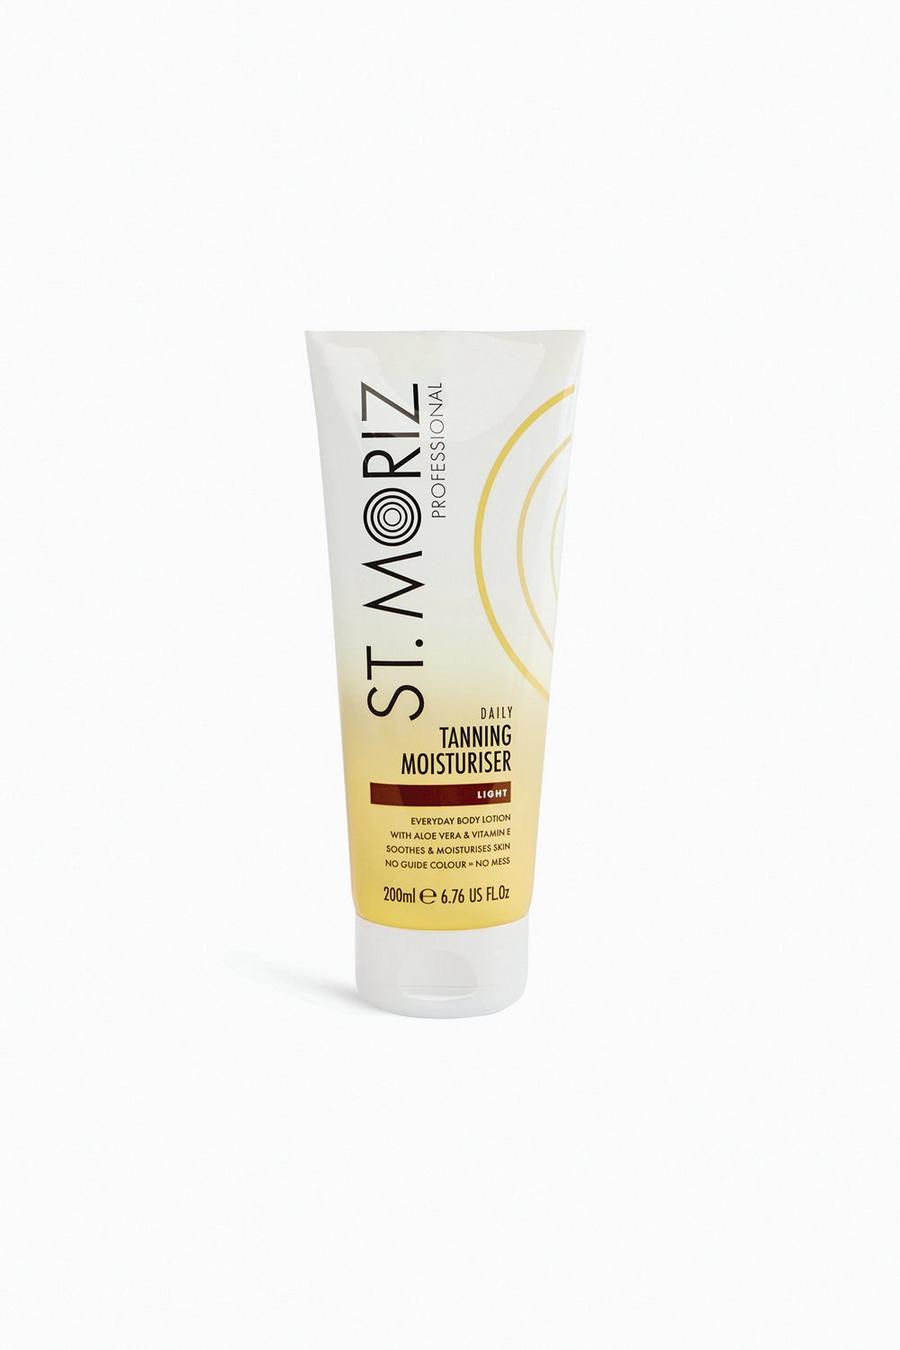 White bianco St. Moriz Professional Daily Tanning Moisturiser Light 200ml